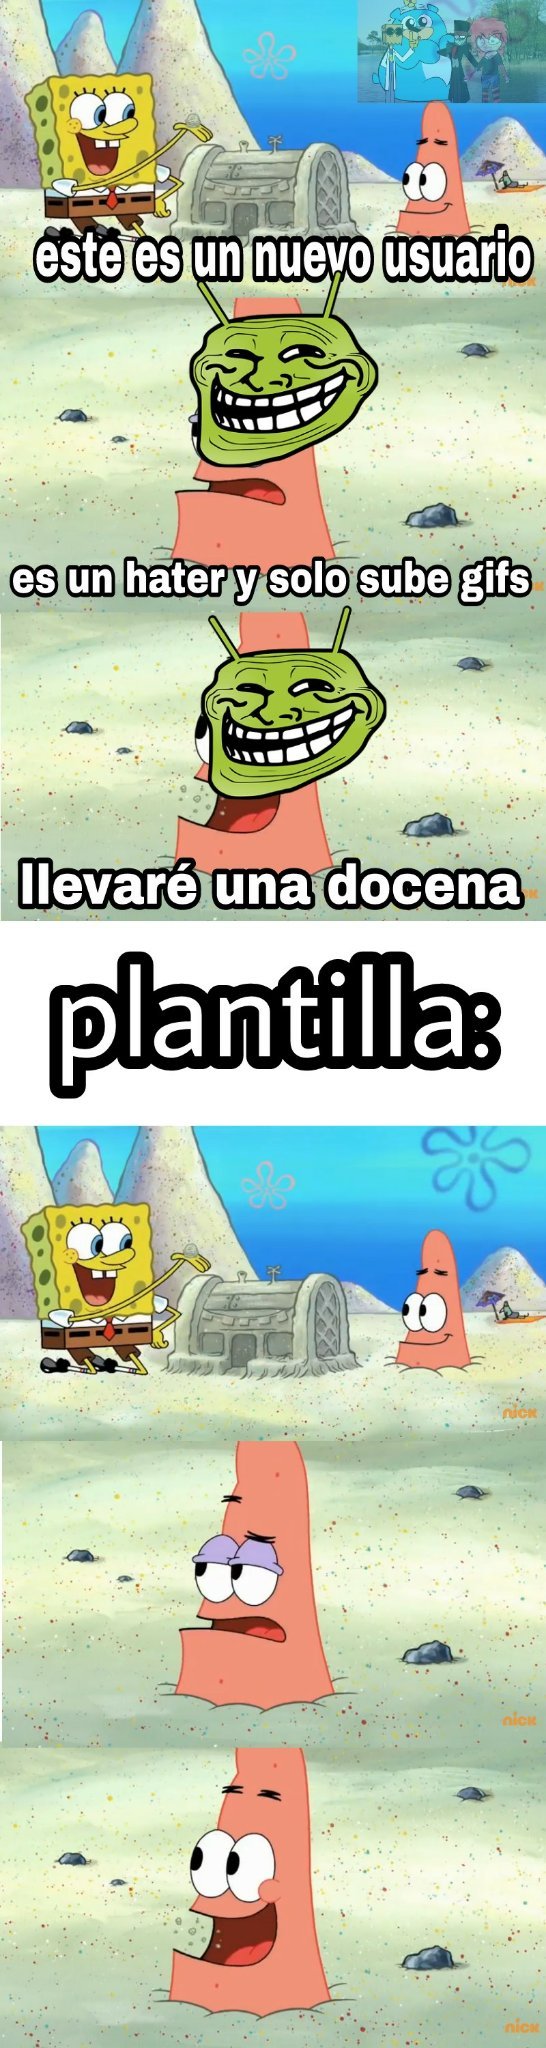 Plantilla :) - meme